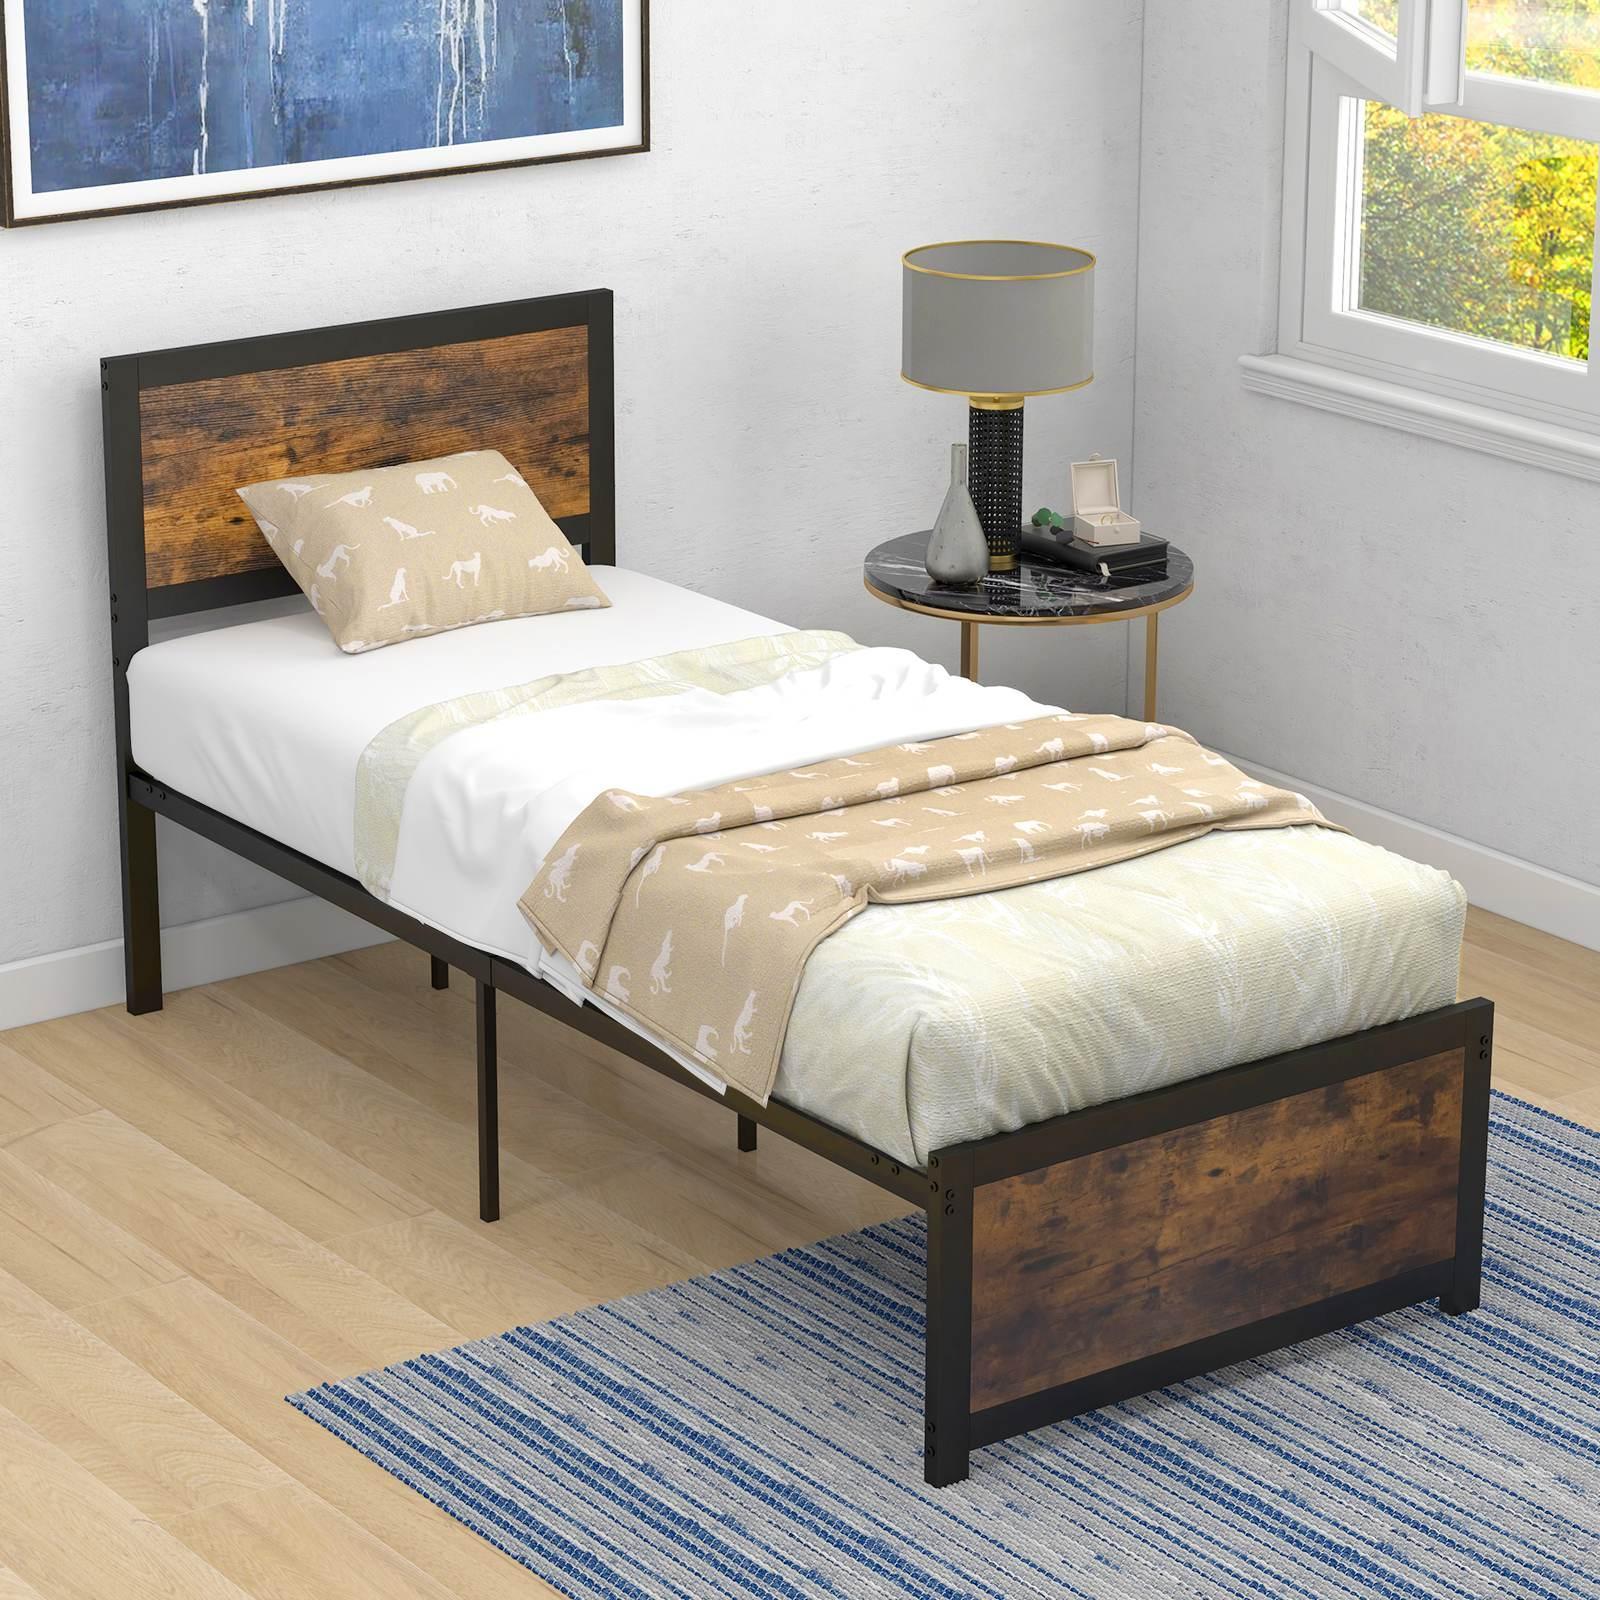 Giantex Single Size Bed Frame Metal Platform Bed w/Headboard Mattress Foundation